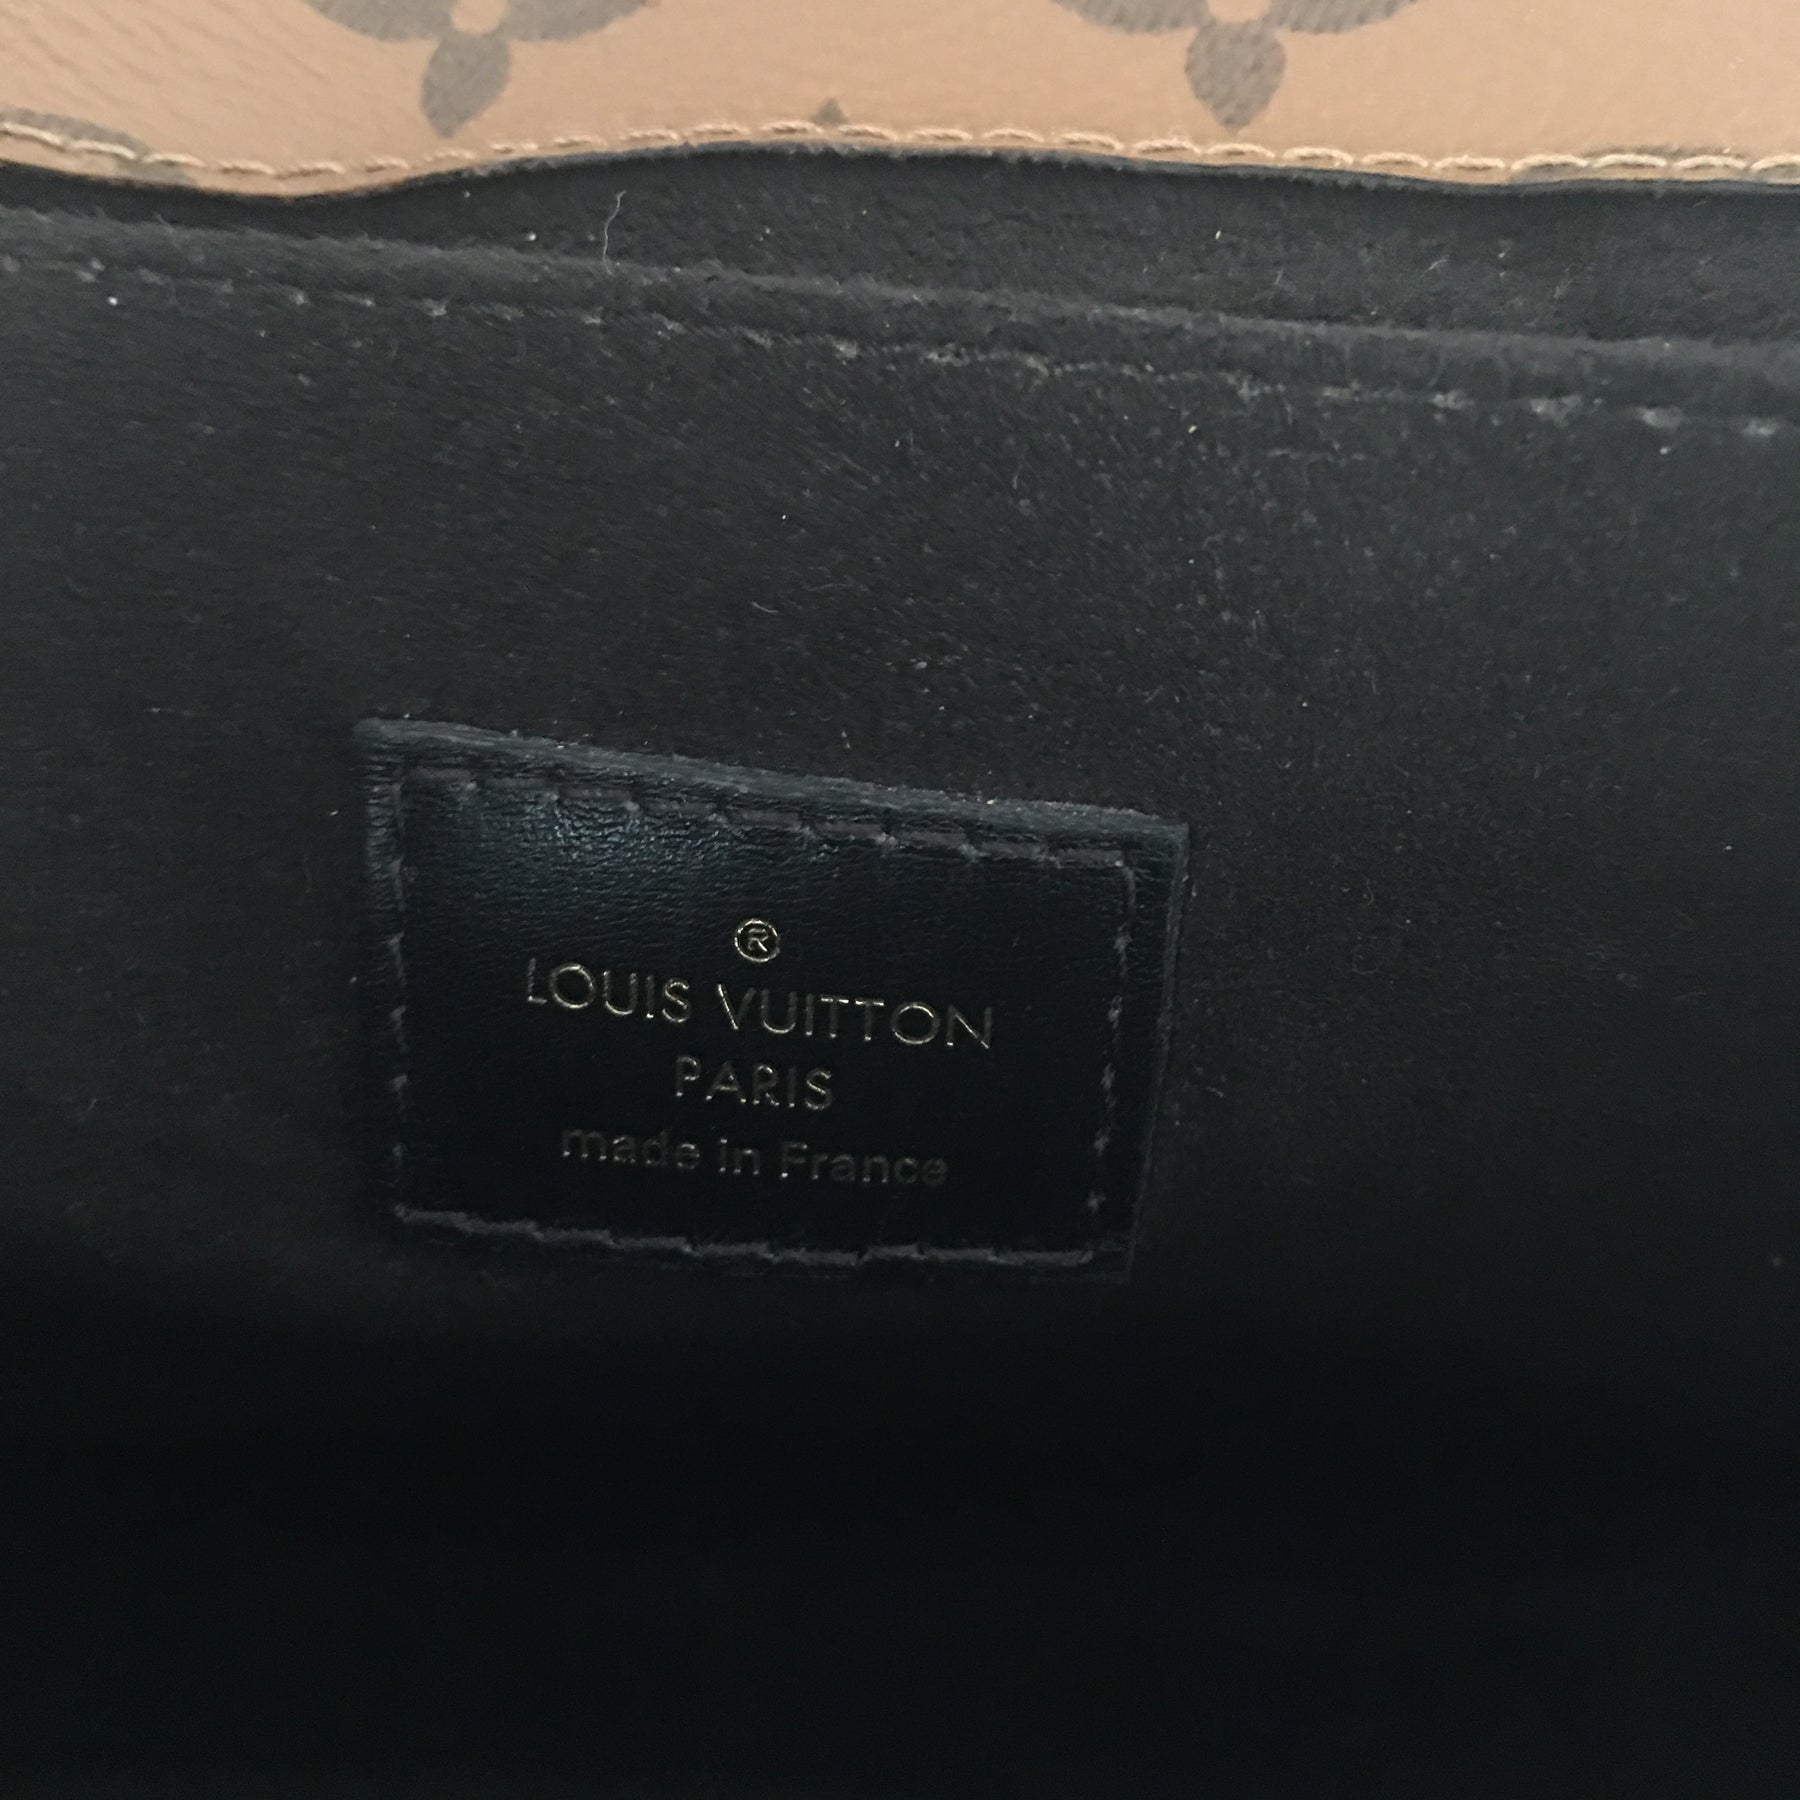 Metis cloth crossbody bag Louis Vuitton Brown in Cloth - 35834610